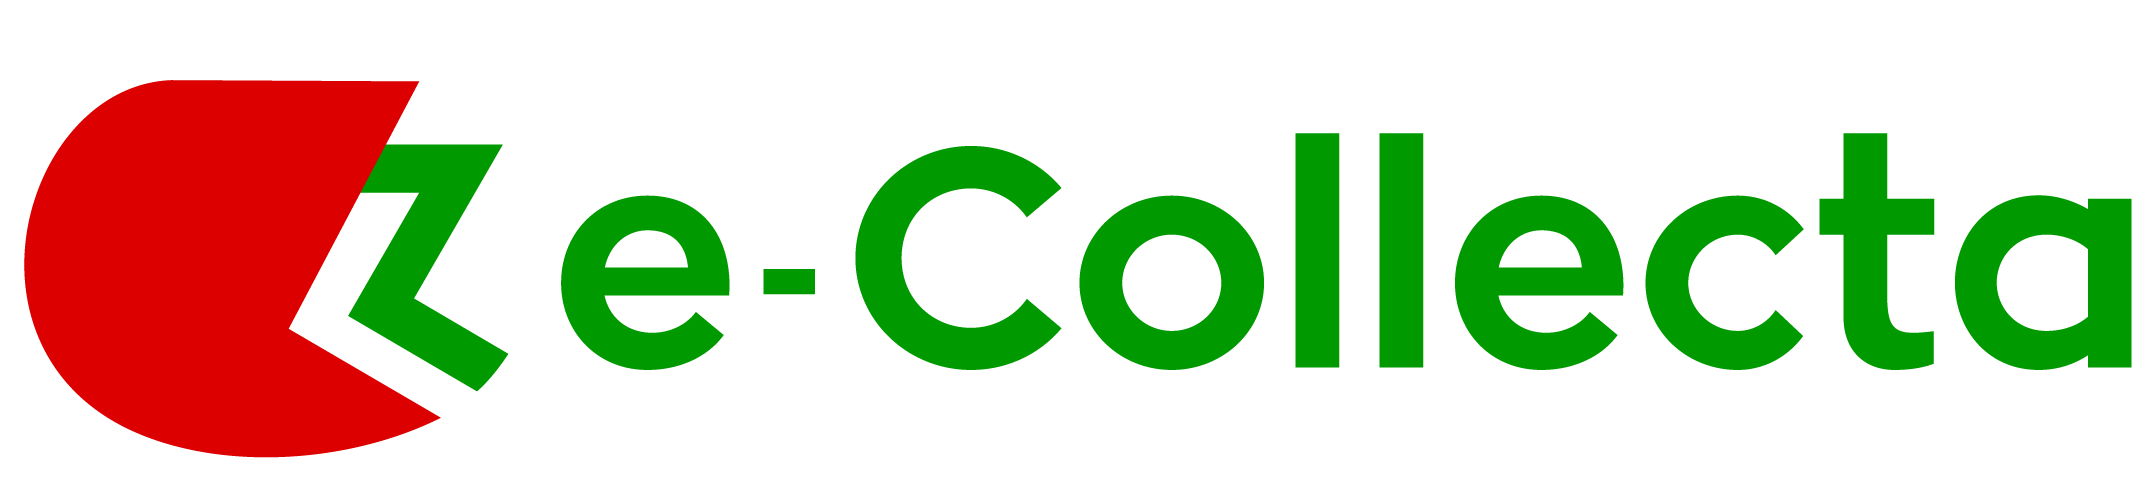 e-Collecta | Crowdfunding Platform